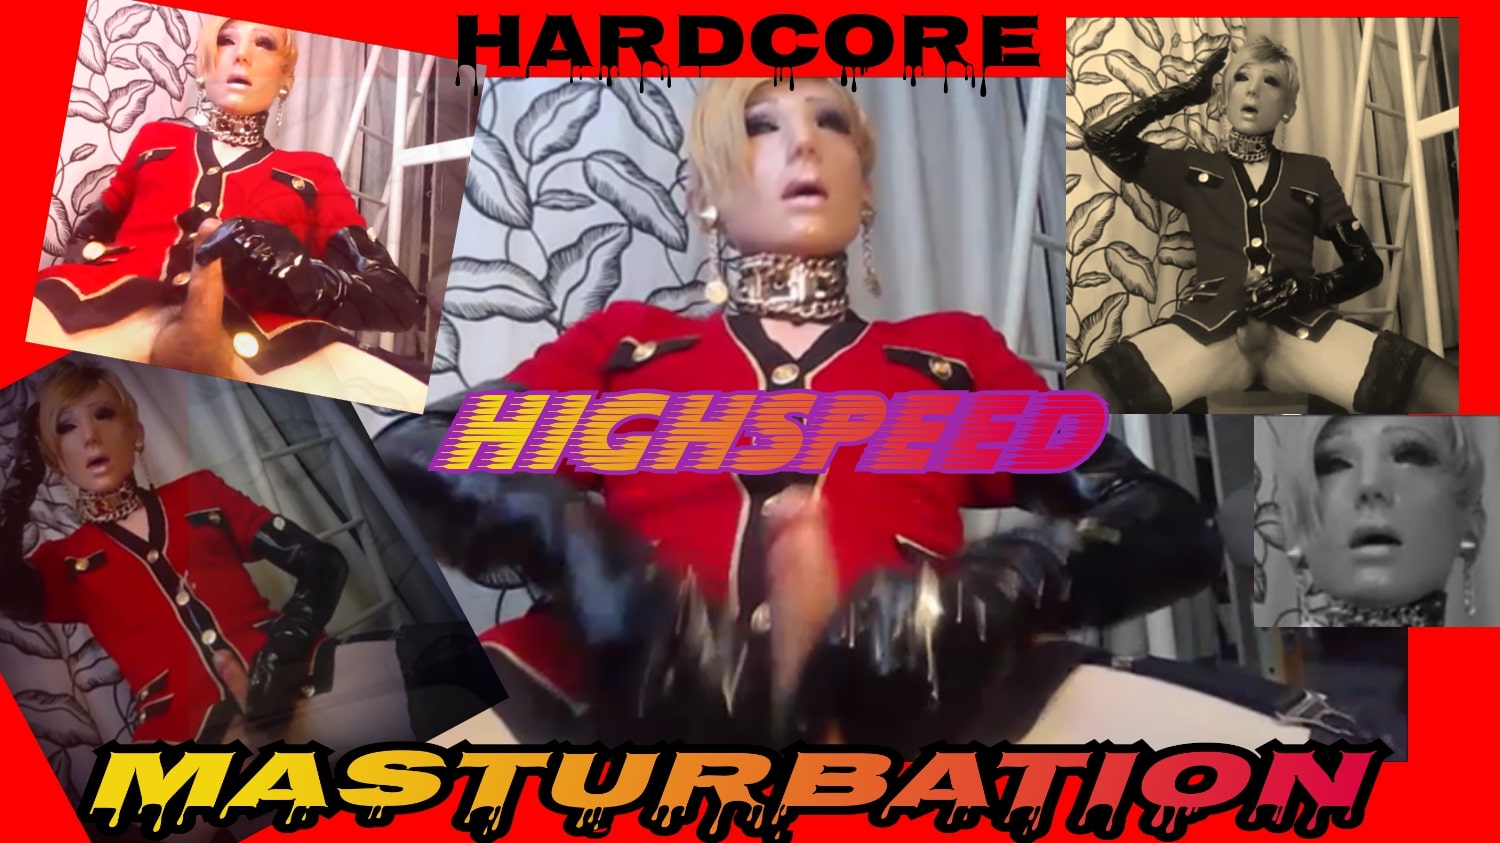 Hardcore HighSpeed Masturbation "Ultra Bass Sonic Mix"